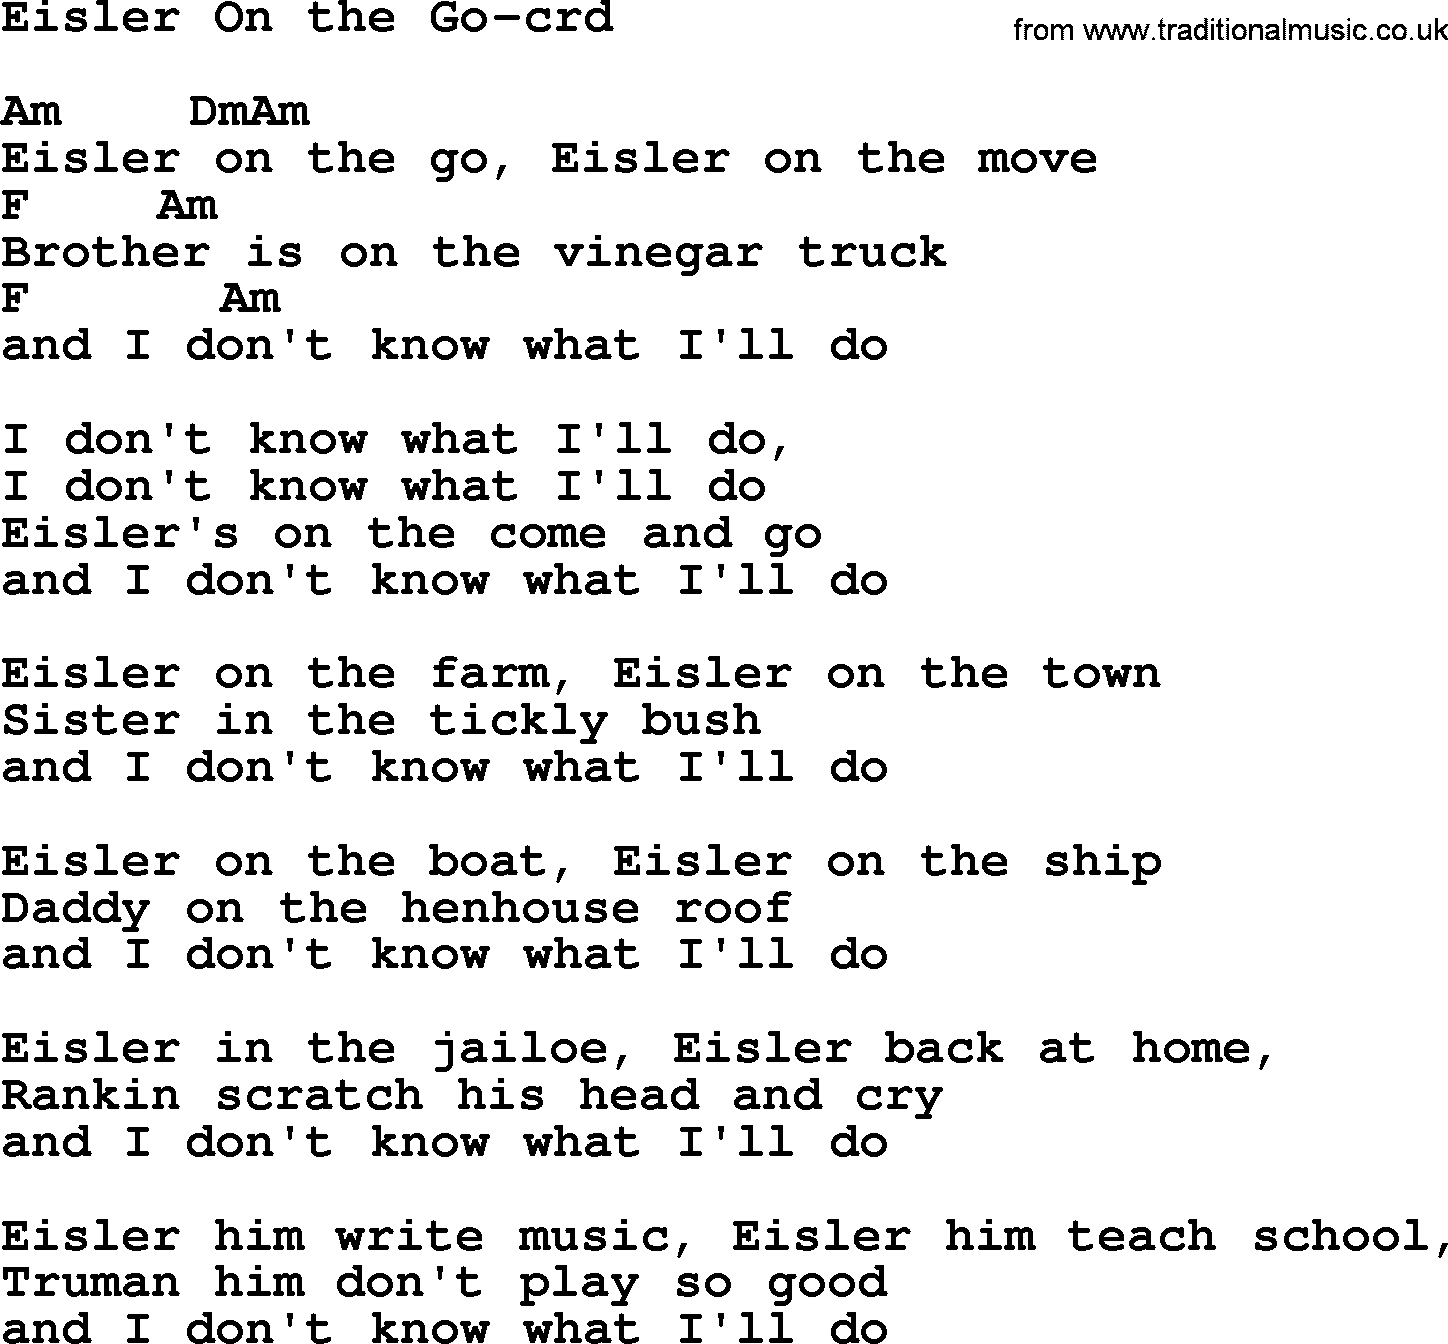 Woody Guthrie song Eisler On The Go lyrics and chords